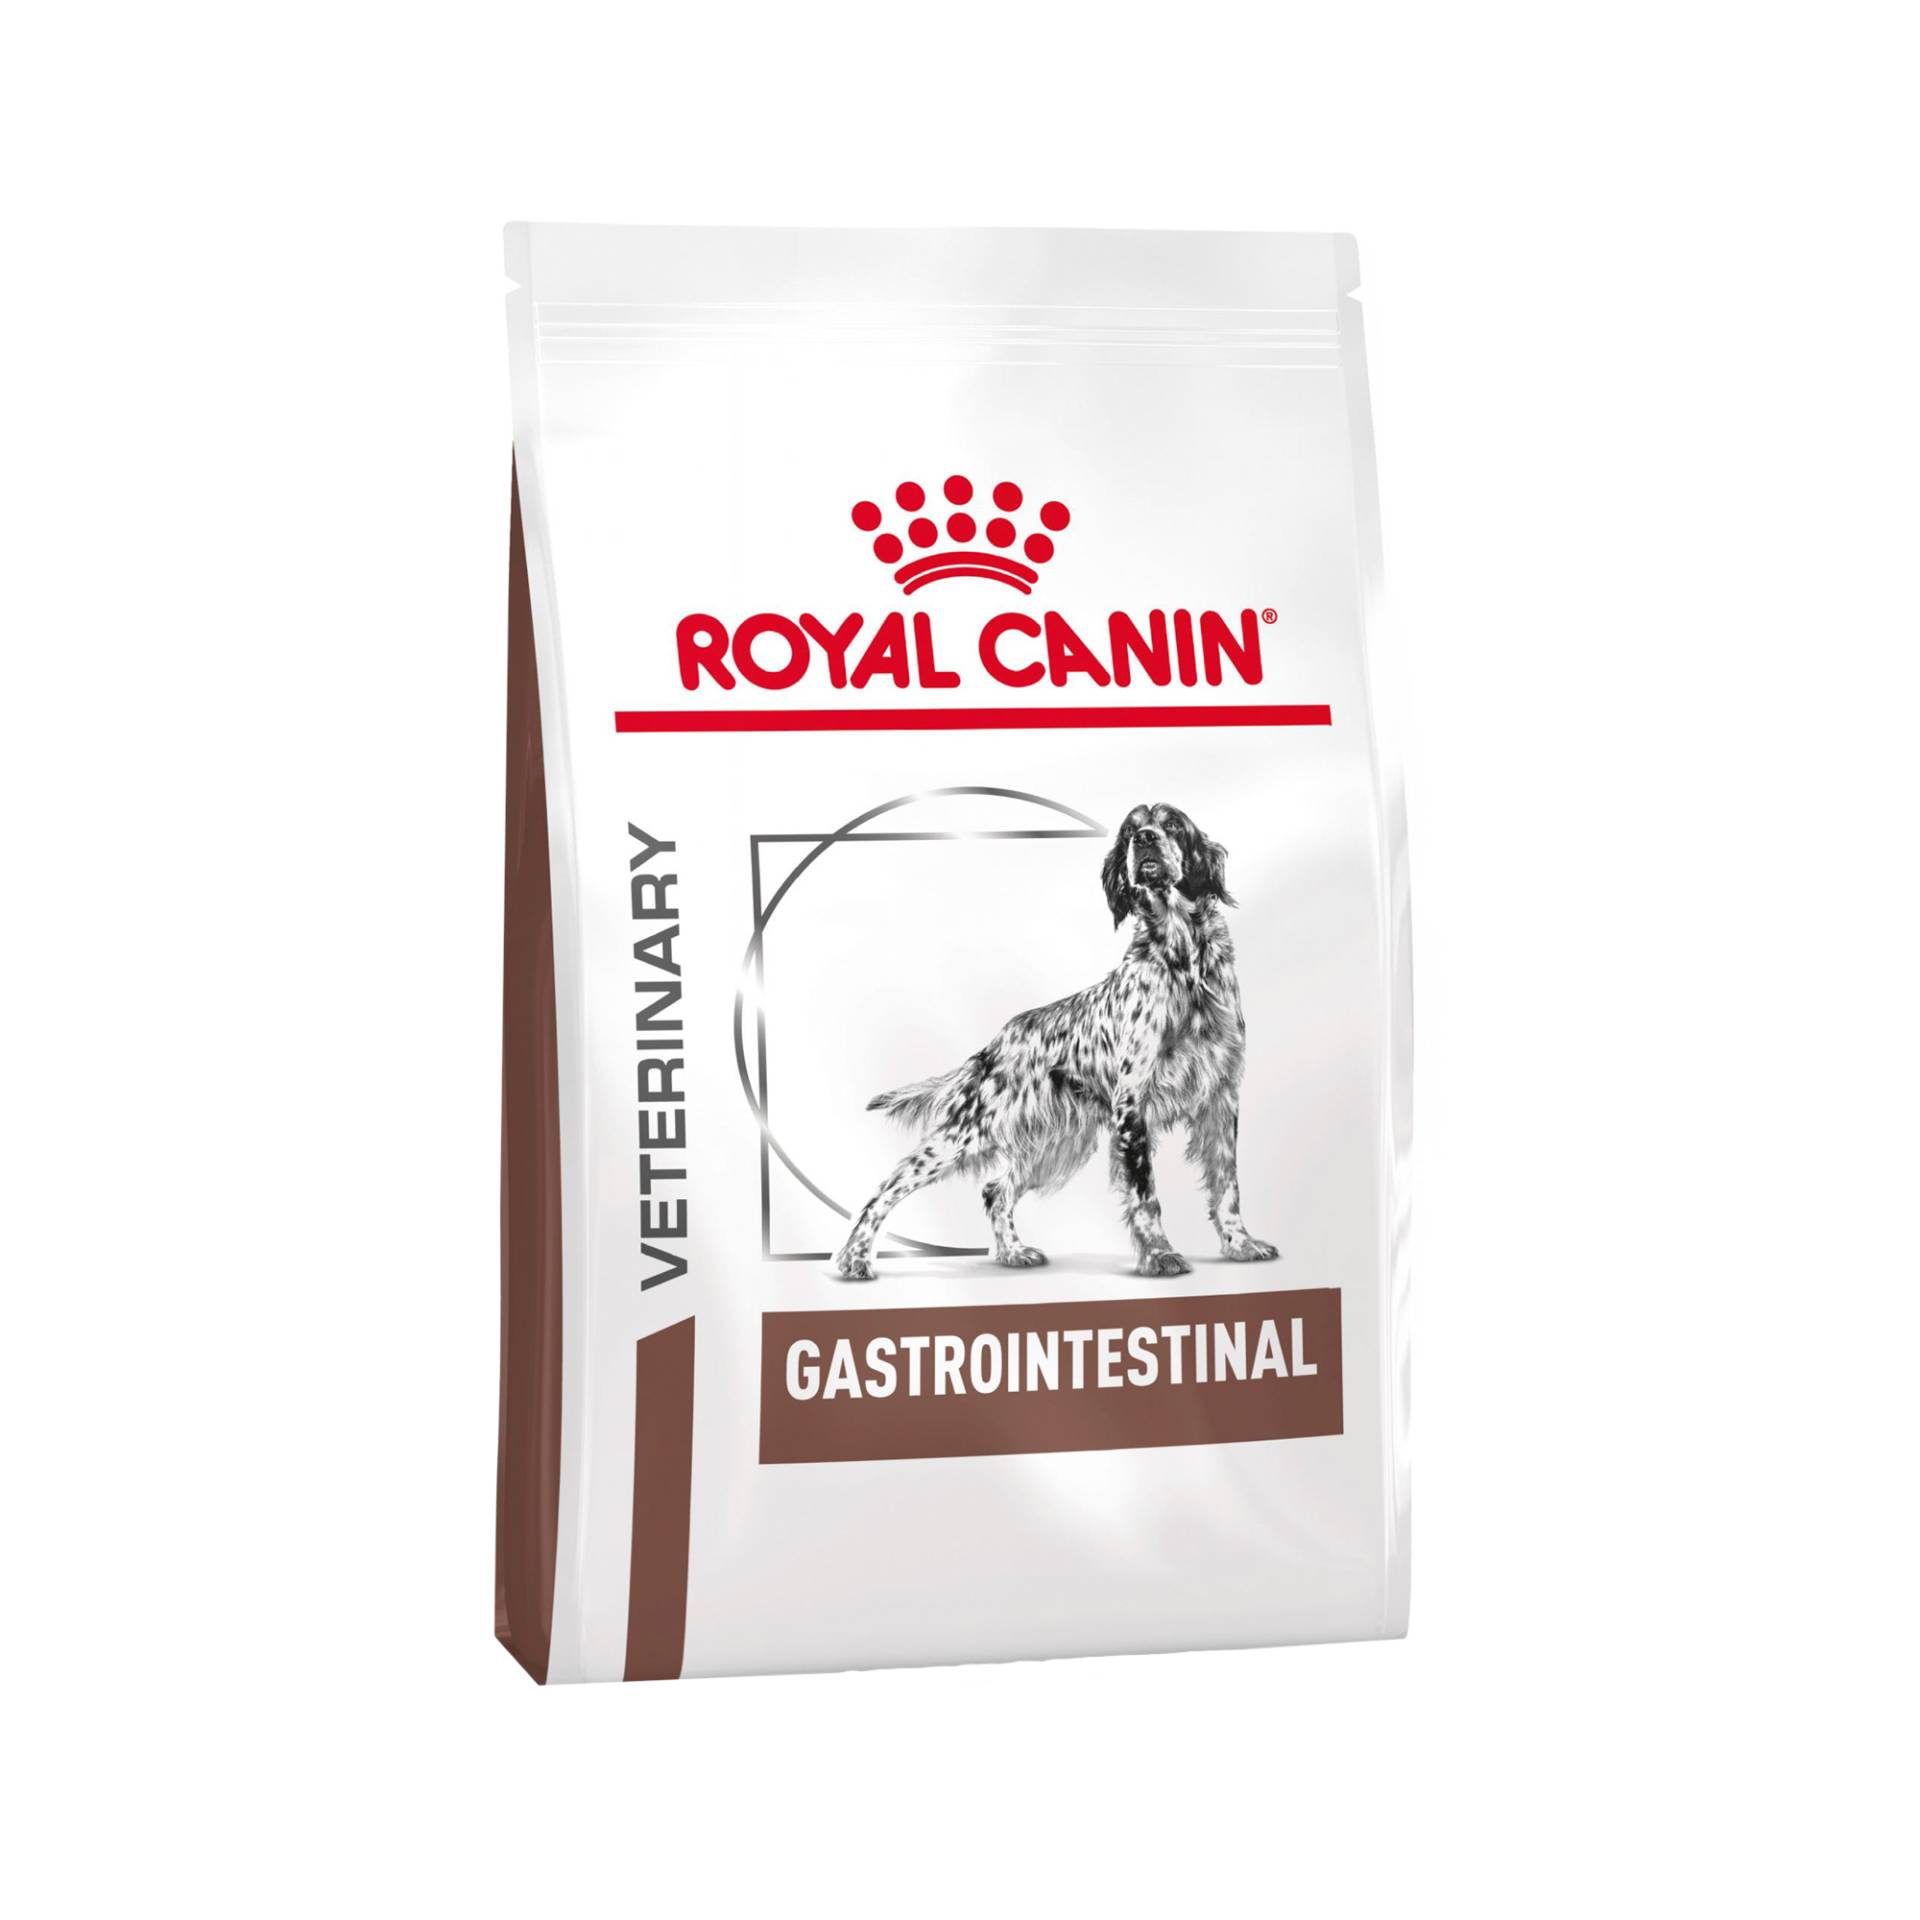 Royal Canin Gastro Intestinal (GI 25) Hundefutter - 15 kg von Royal Canin